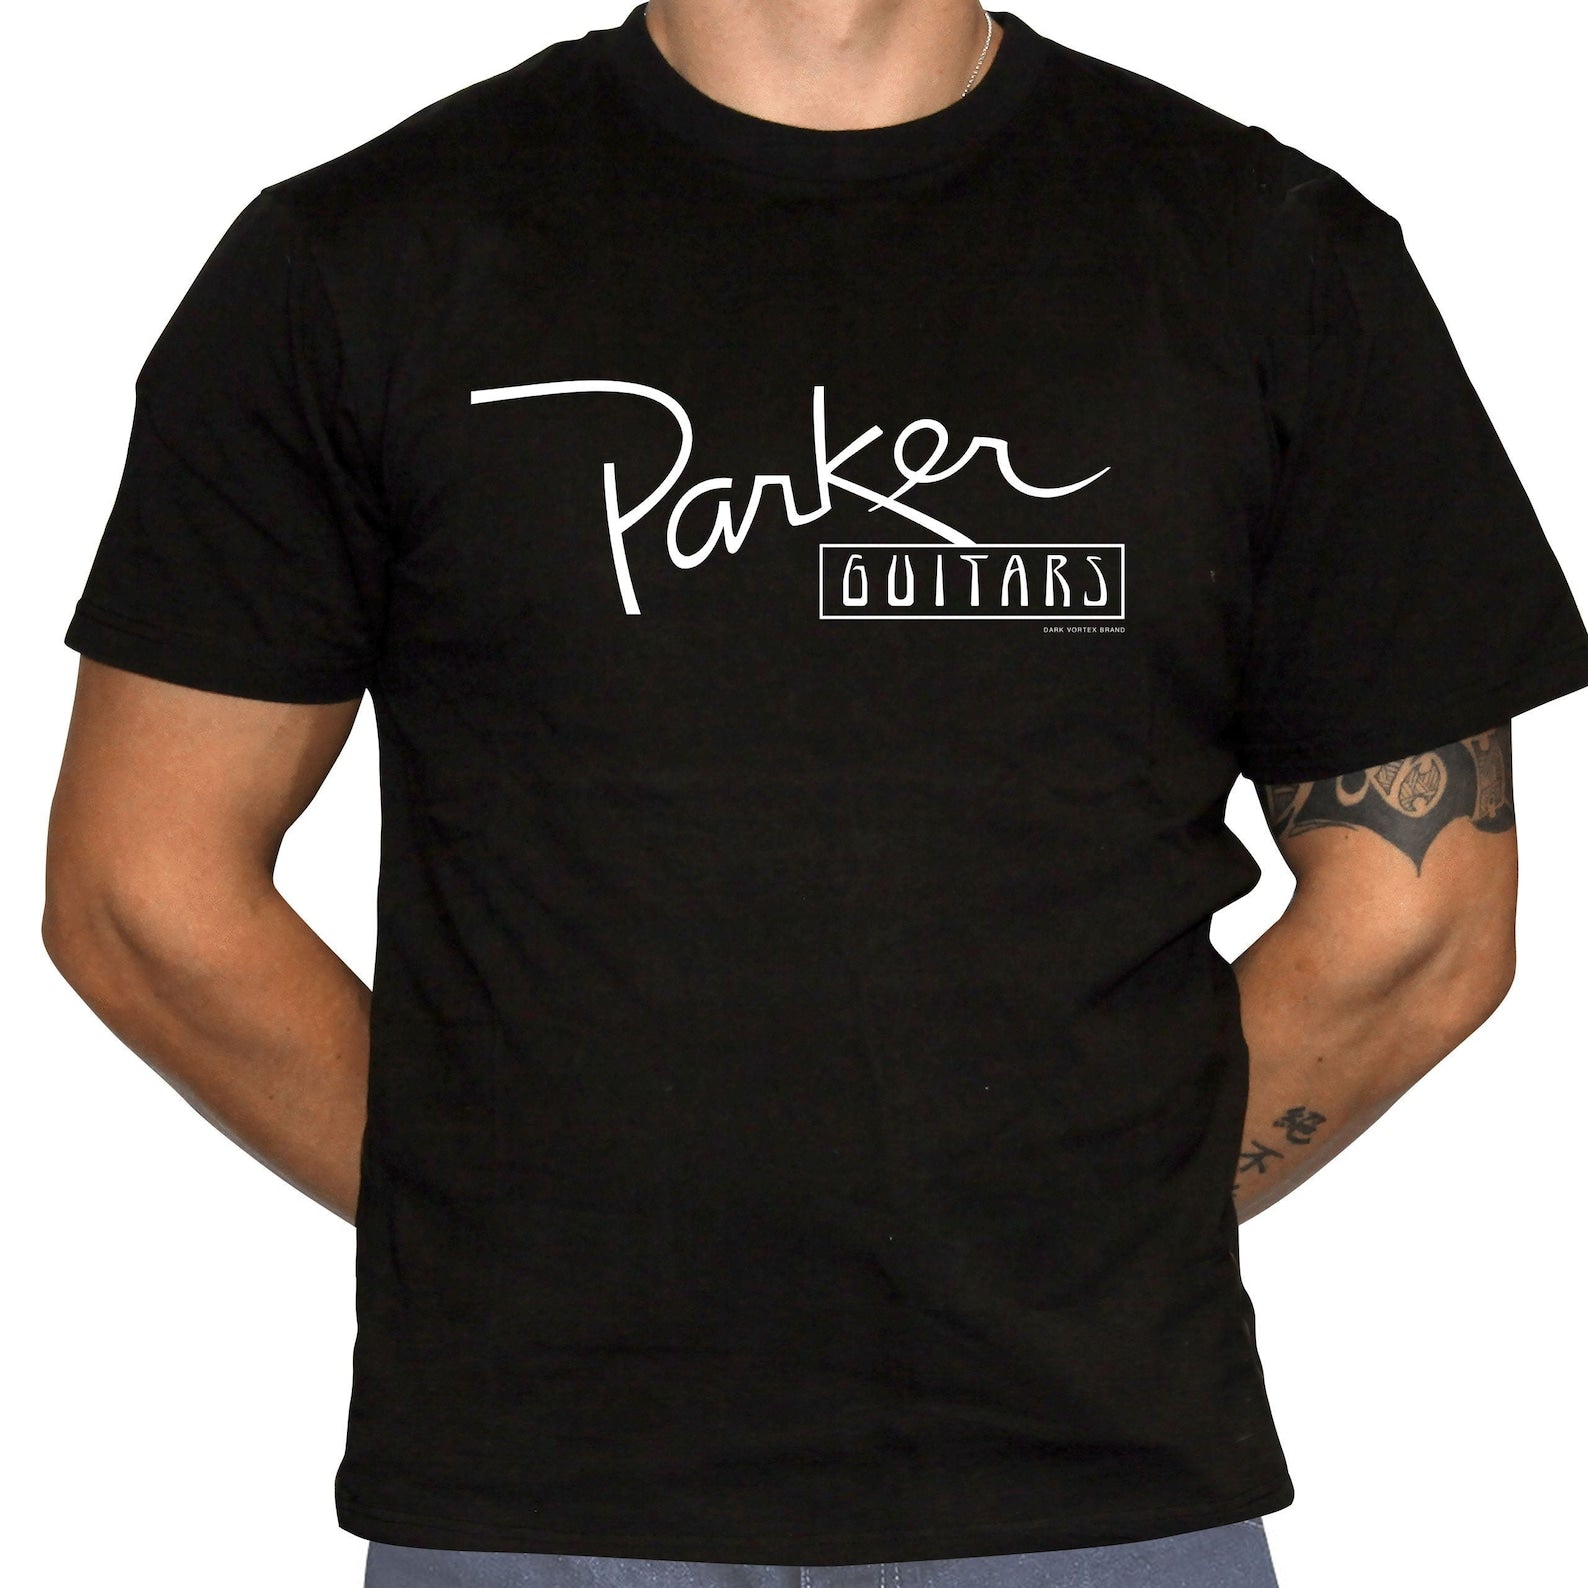 Parker Guitars Black T-Shirt w/White Logo - XL Size